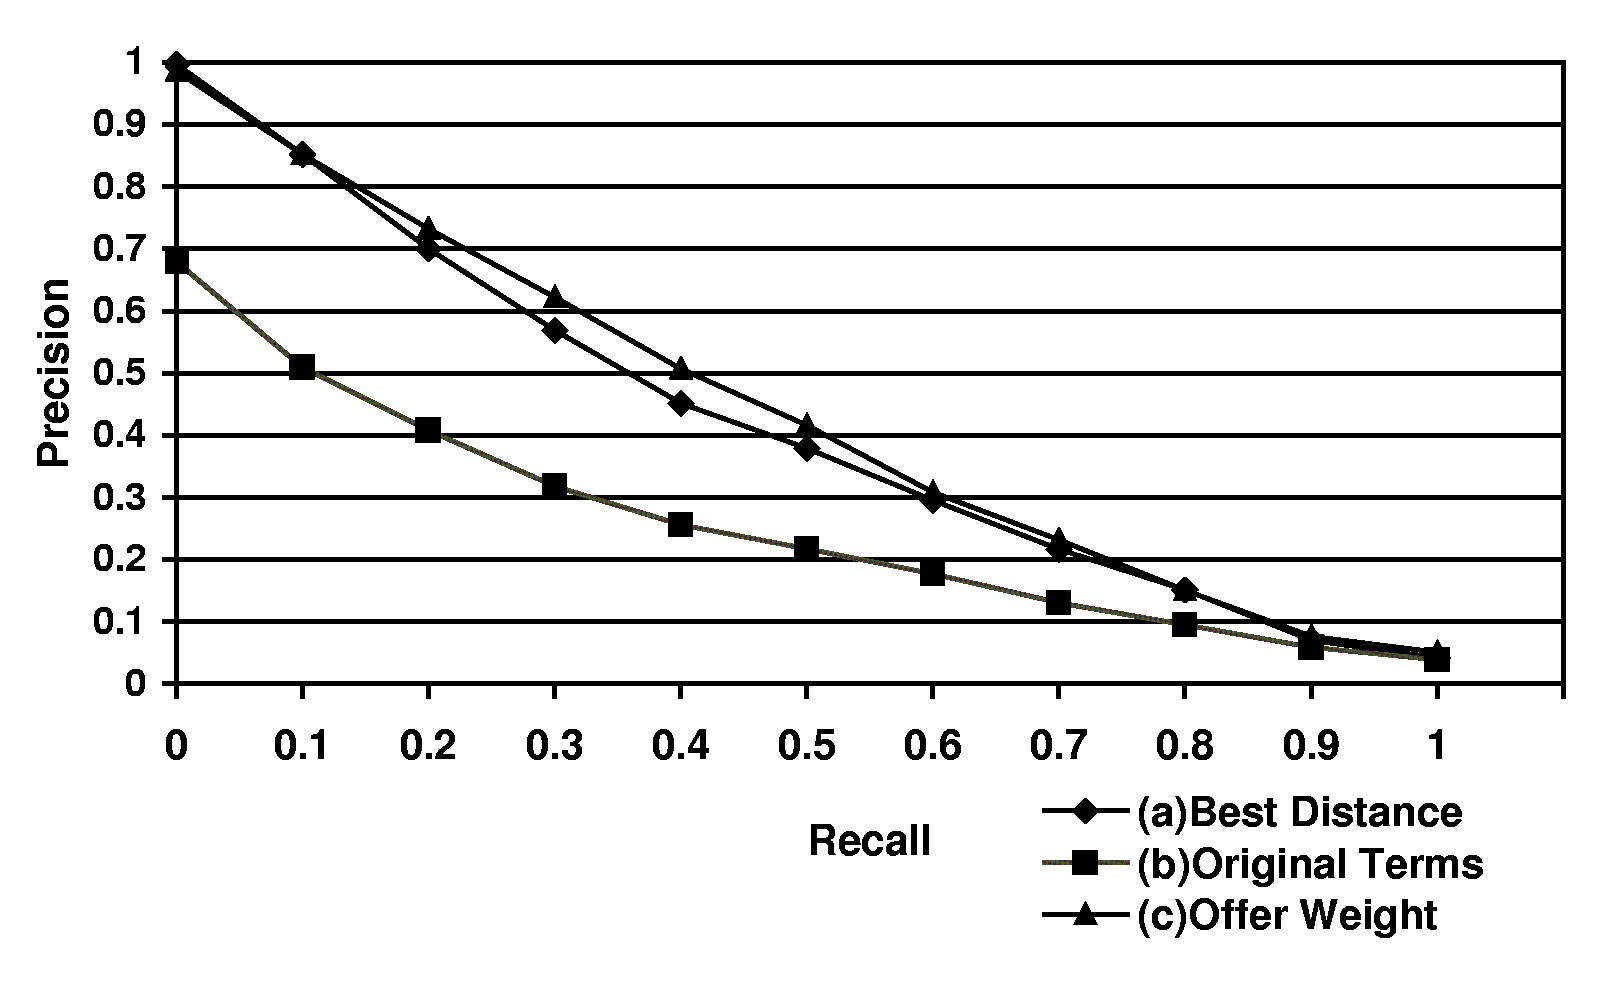 Figure 1: Precision Values at 11-Recall Levels